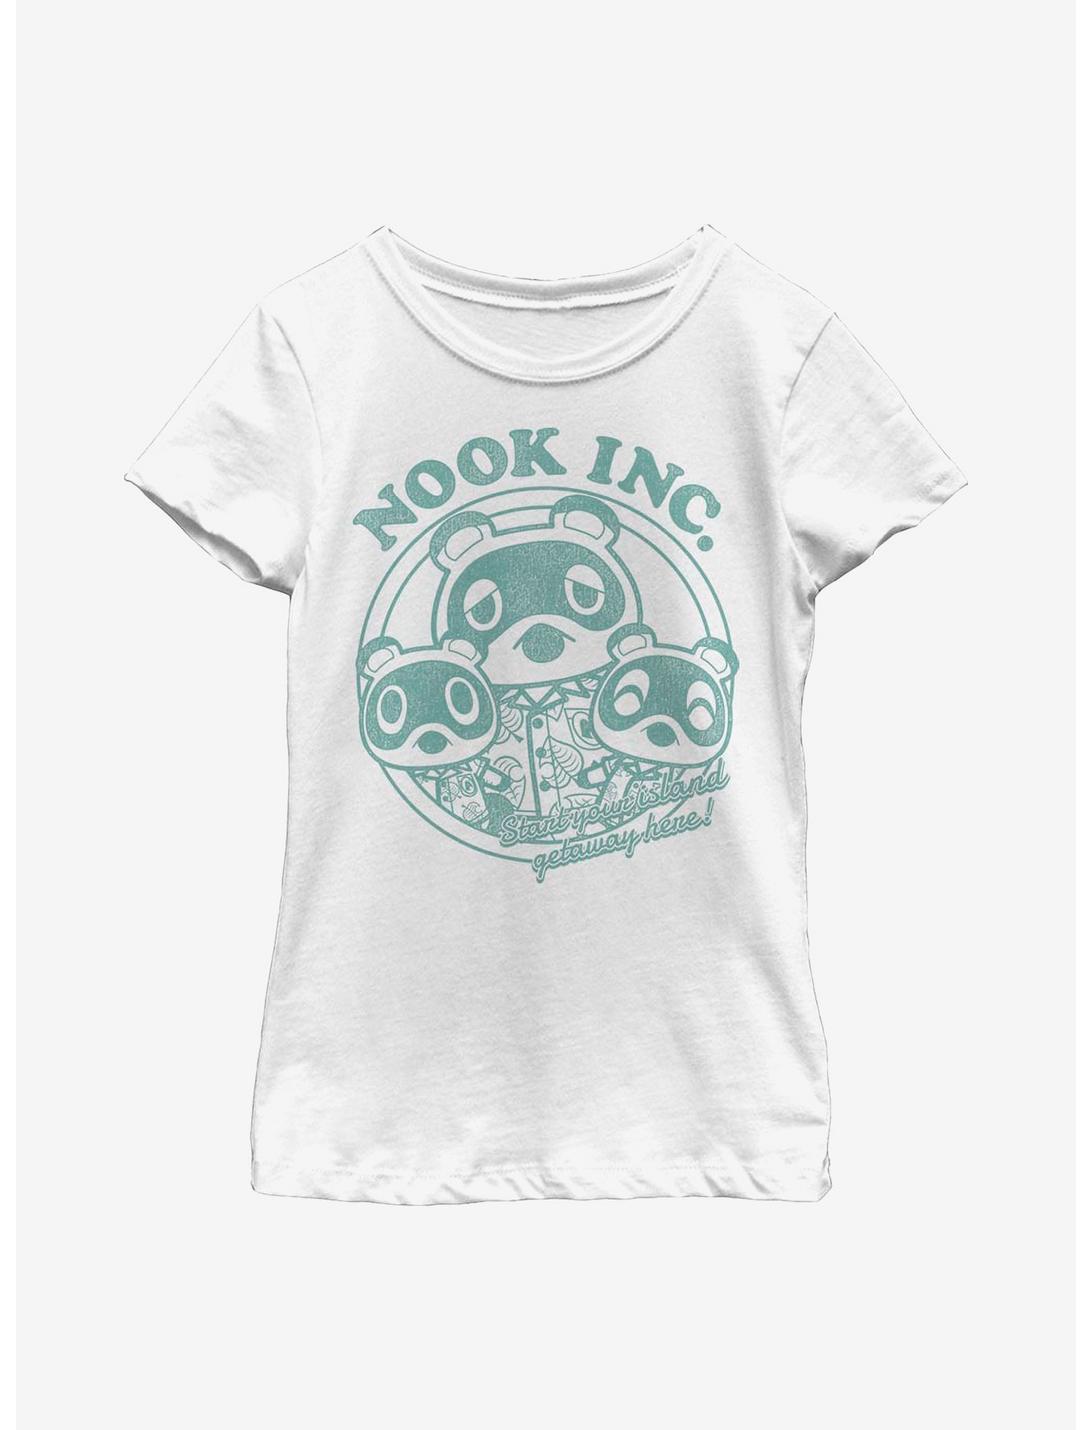 Animal Crossing: New Horizons Nook Inc. Getaway Youth Girls T-Shirt, WHITE, hi-res